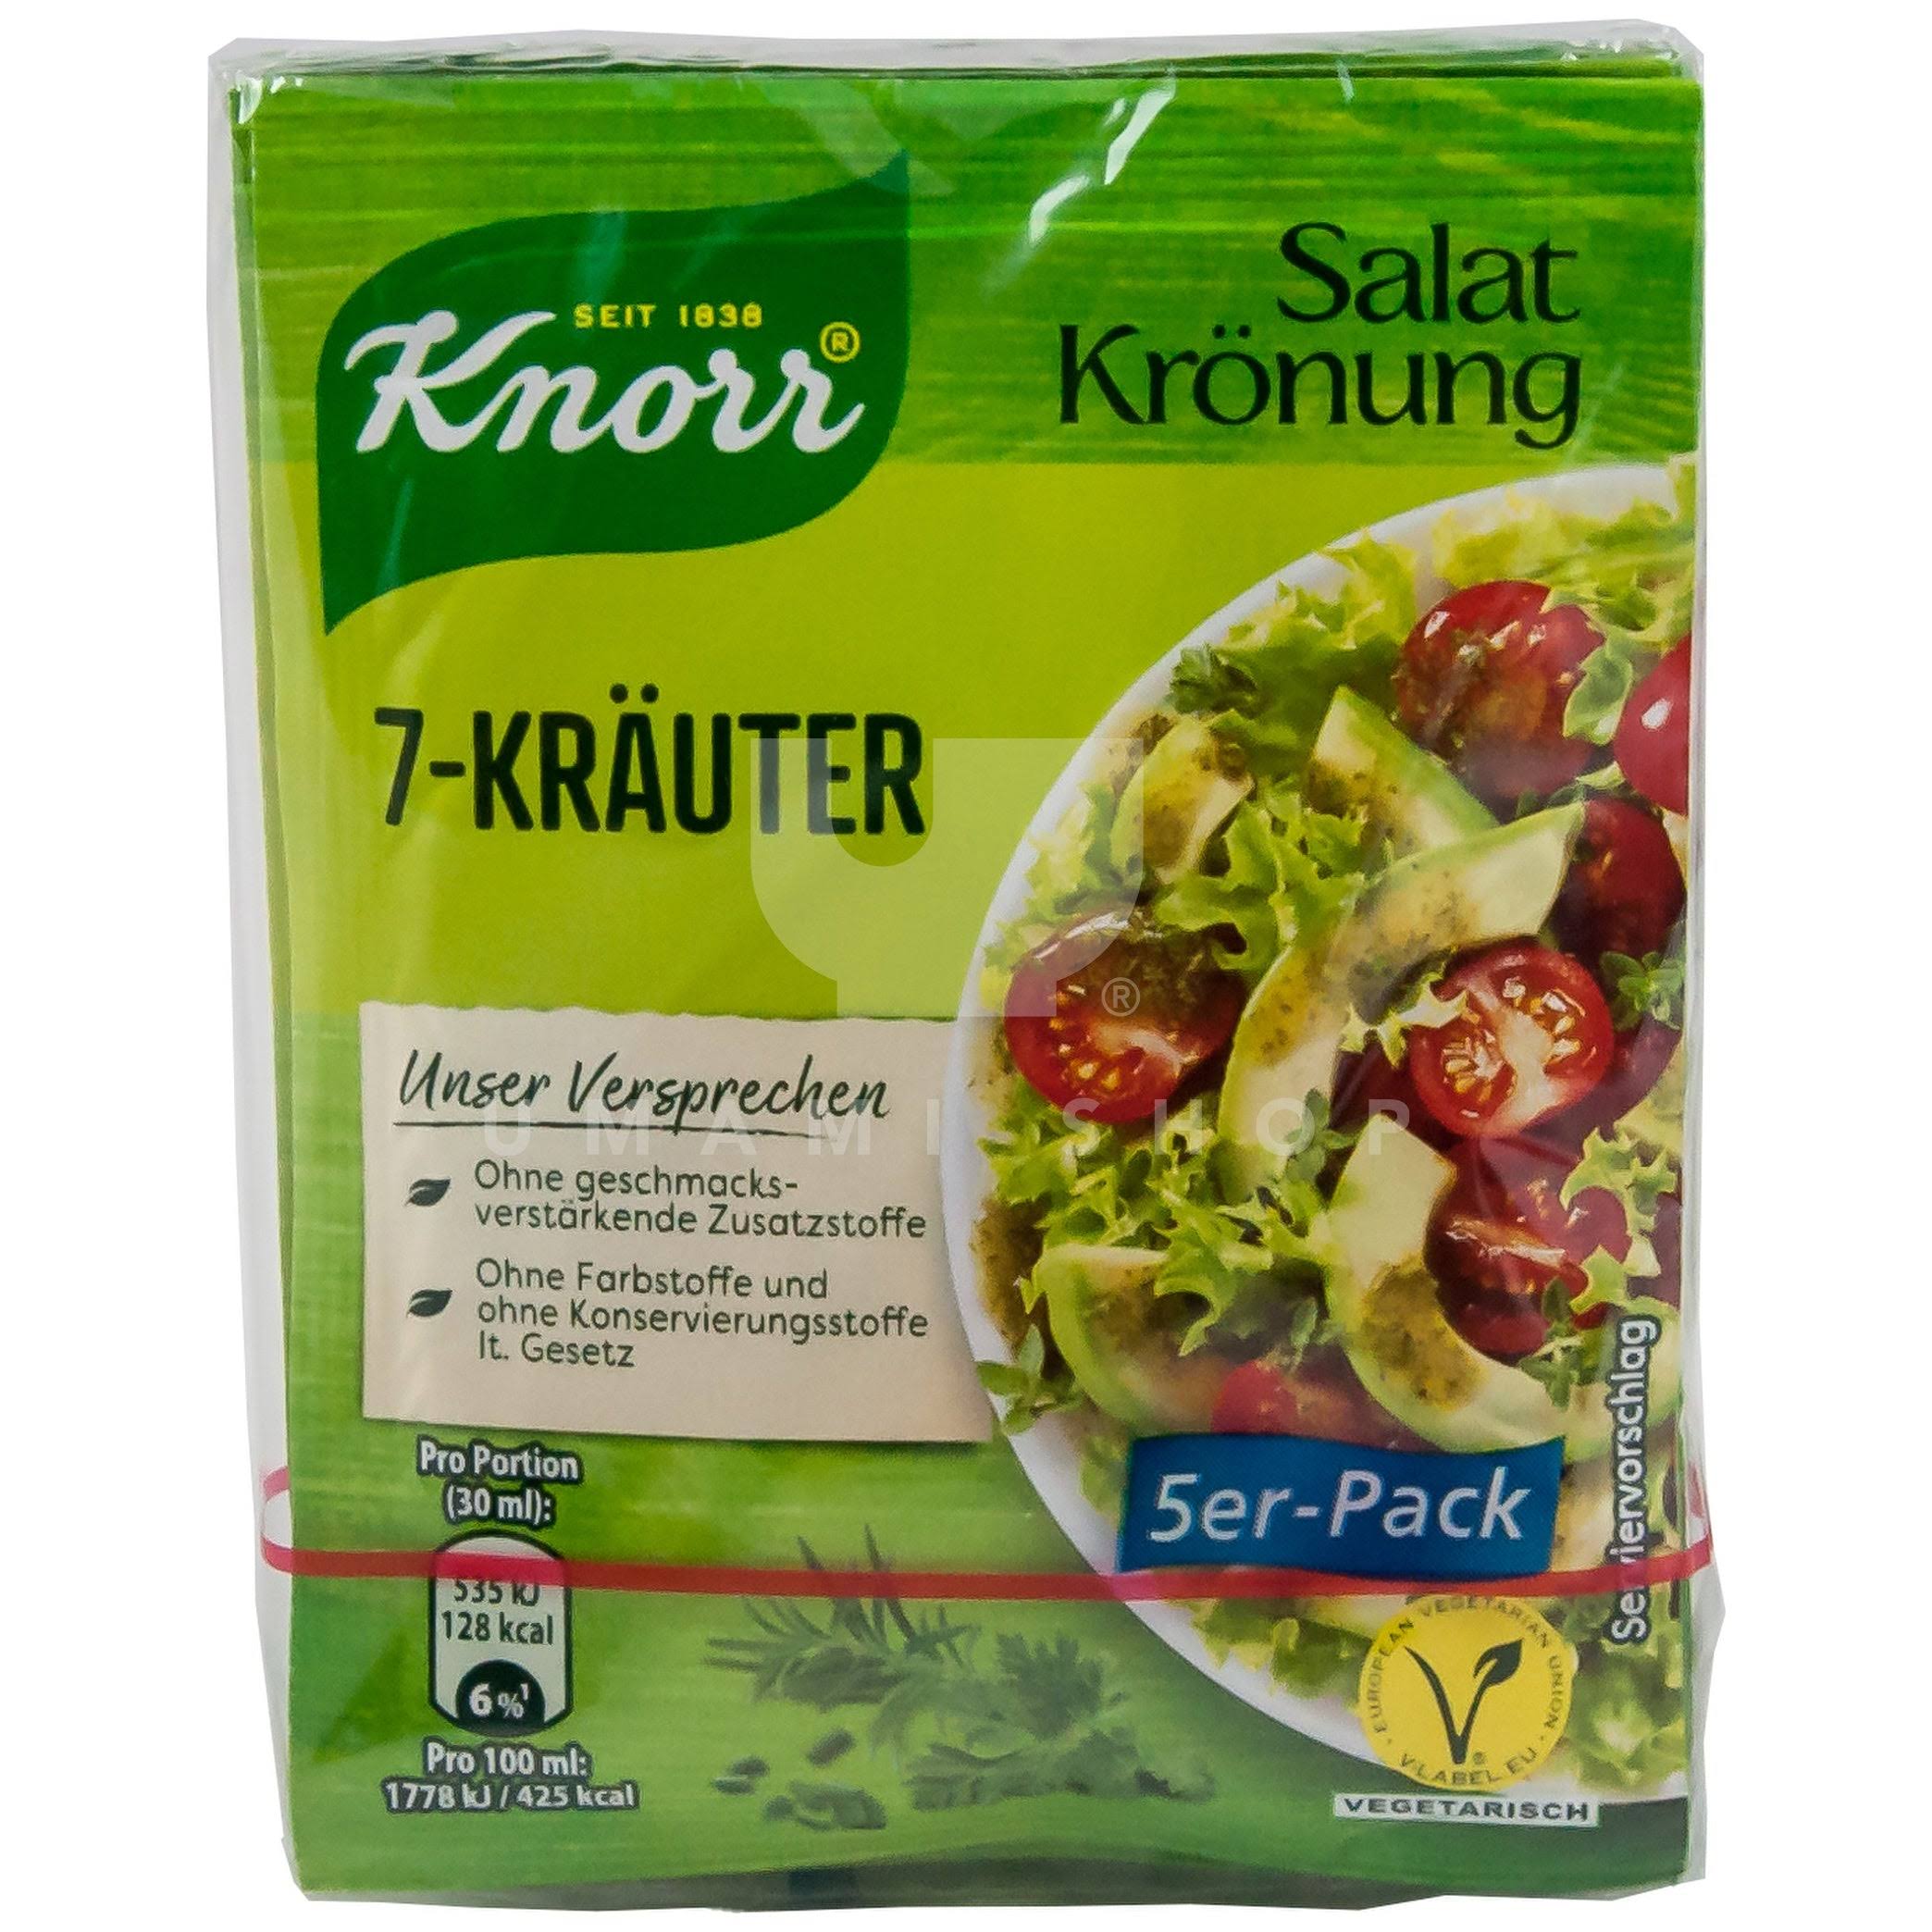 5x 5 Packs Knorr Salat Kroenung 7 Kräuter Herbs Salad Dressing from Germany